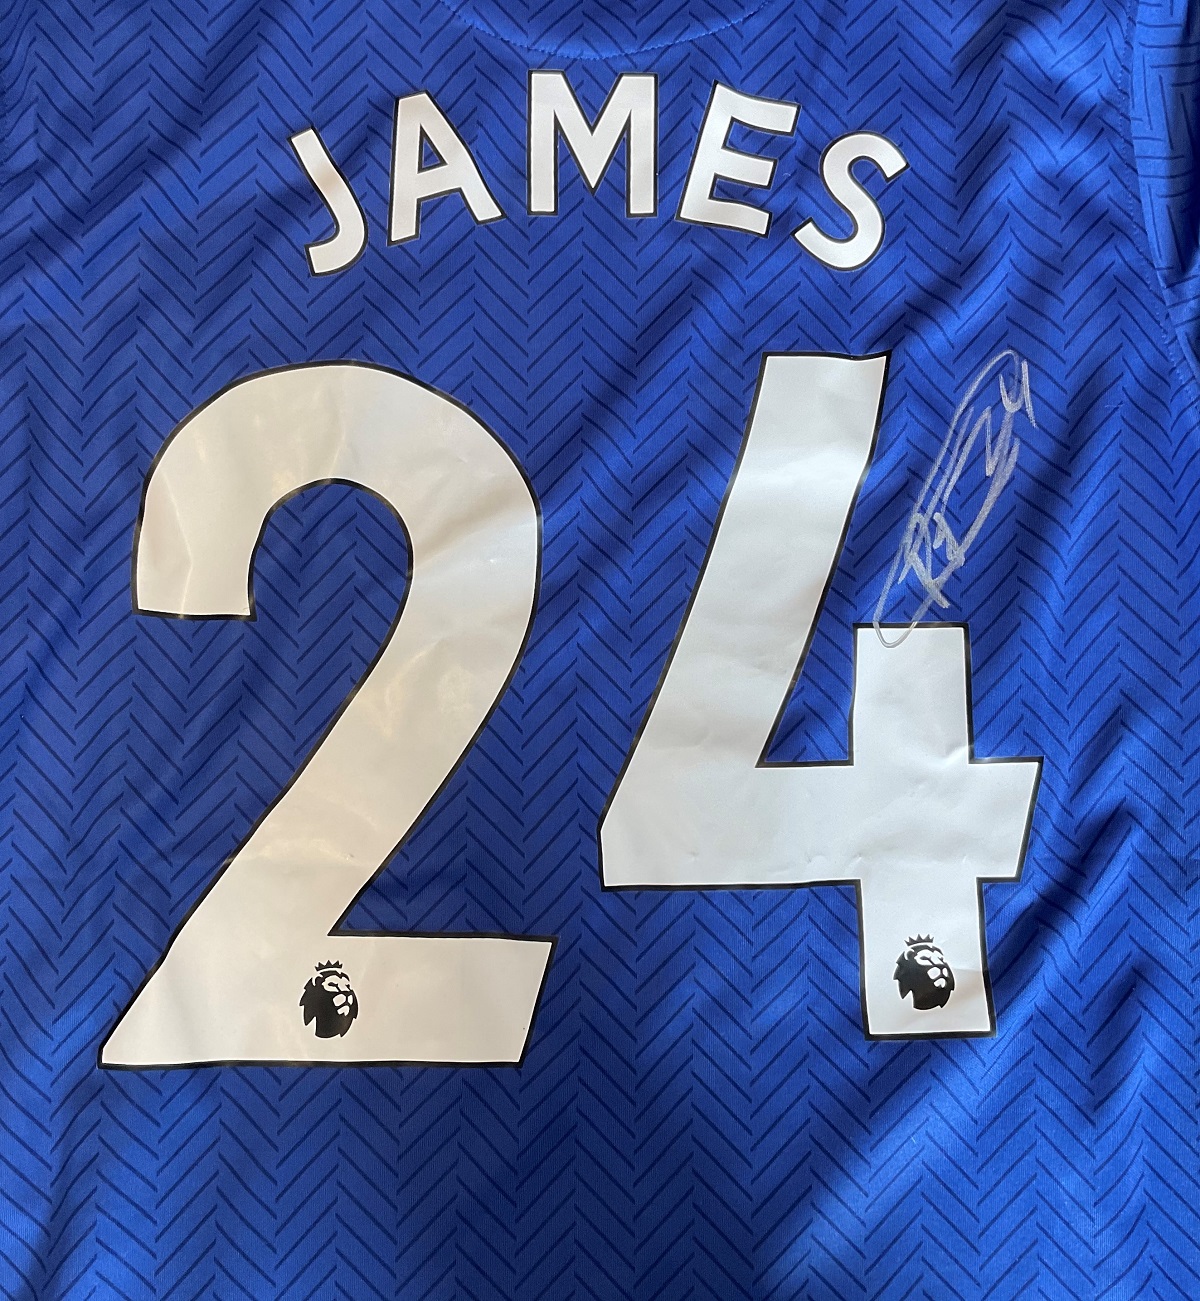 Football Reece James signed Chelsea replica home shirt signature on back. Size medium. Reece James - Image 2 of 2